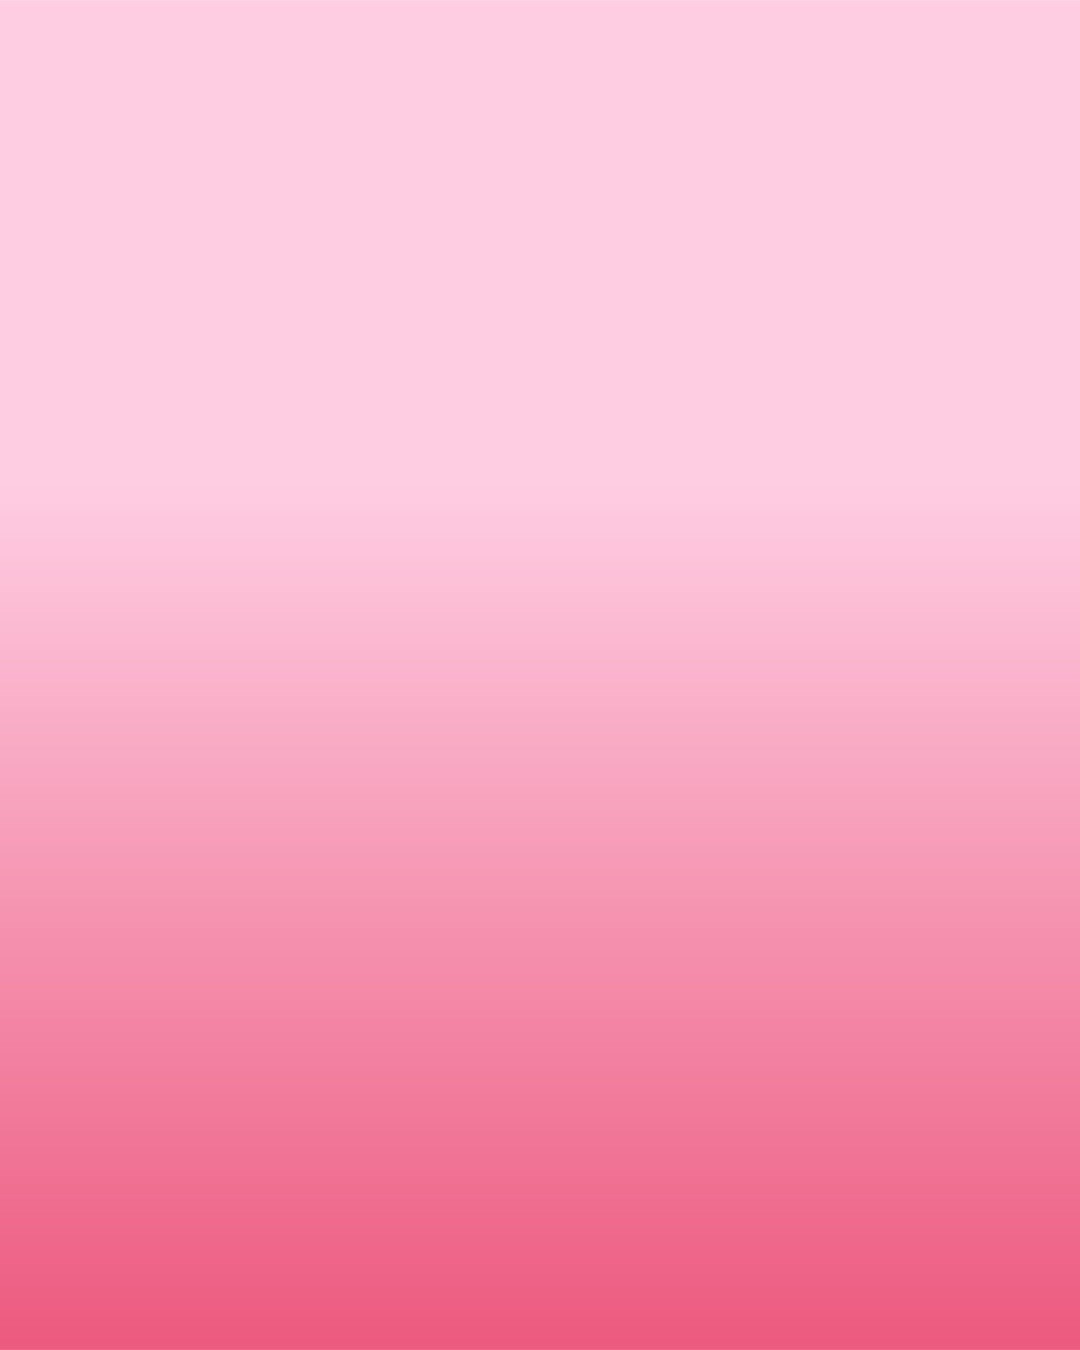 White and pink background 3 Pozadina 3 Strah